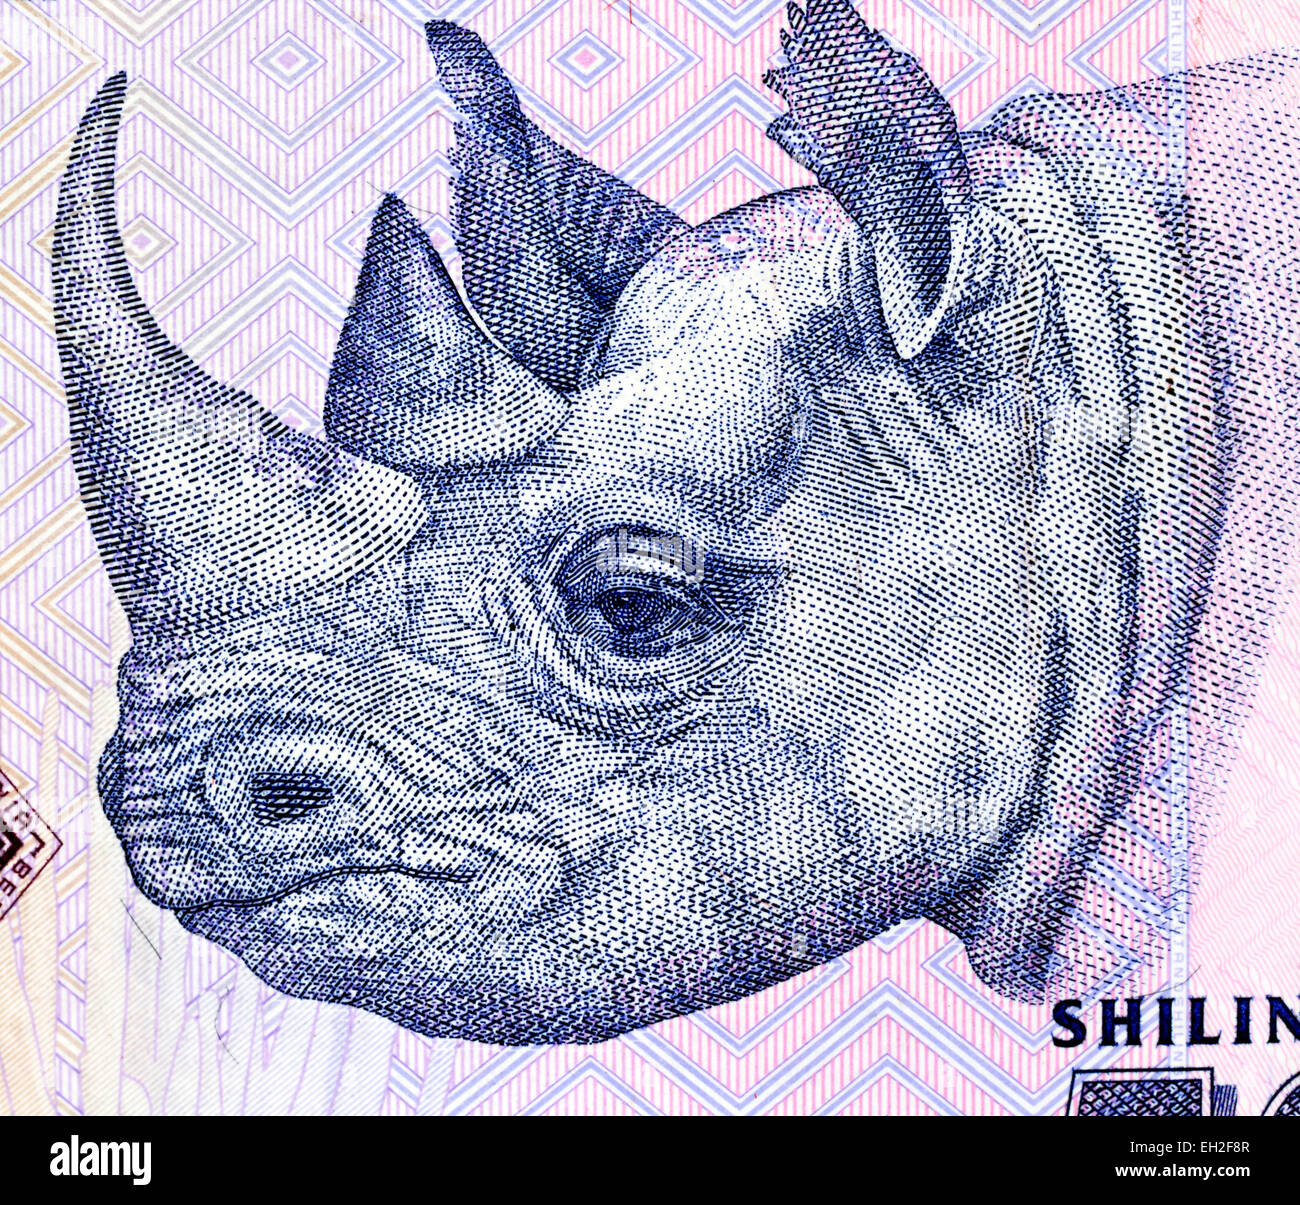 Black Rhinoceros (Diceros bicornis) from 5000 shillings banknote, Tanzania, 2010 Stock Photo